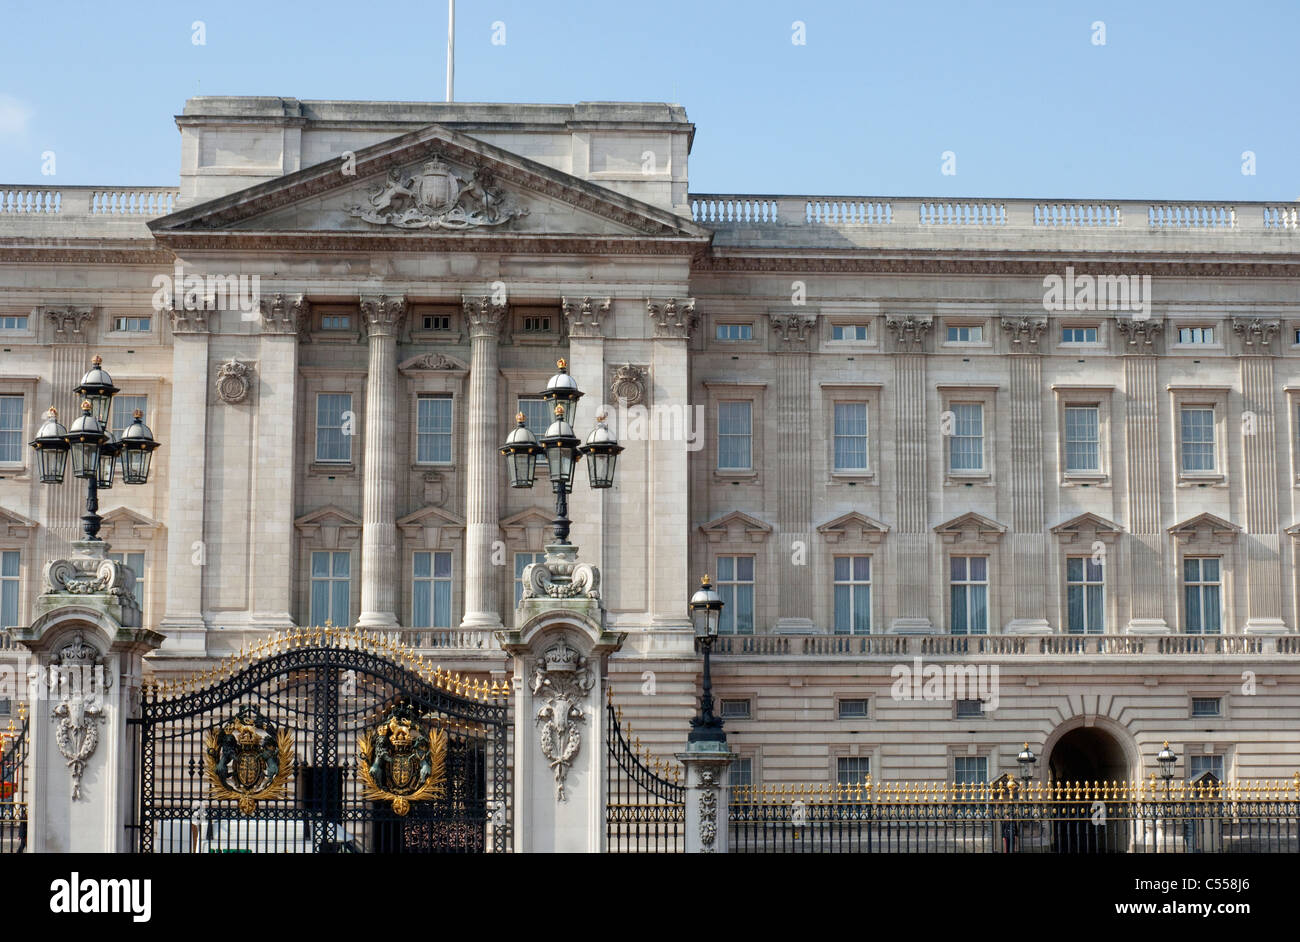 Facade of a palace, Buckingham Palace, City of Westminster, London, England Stock Photo